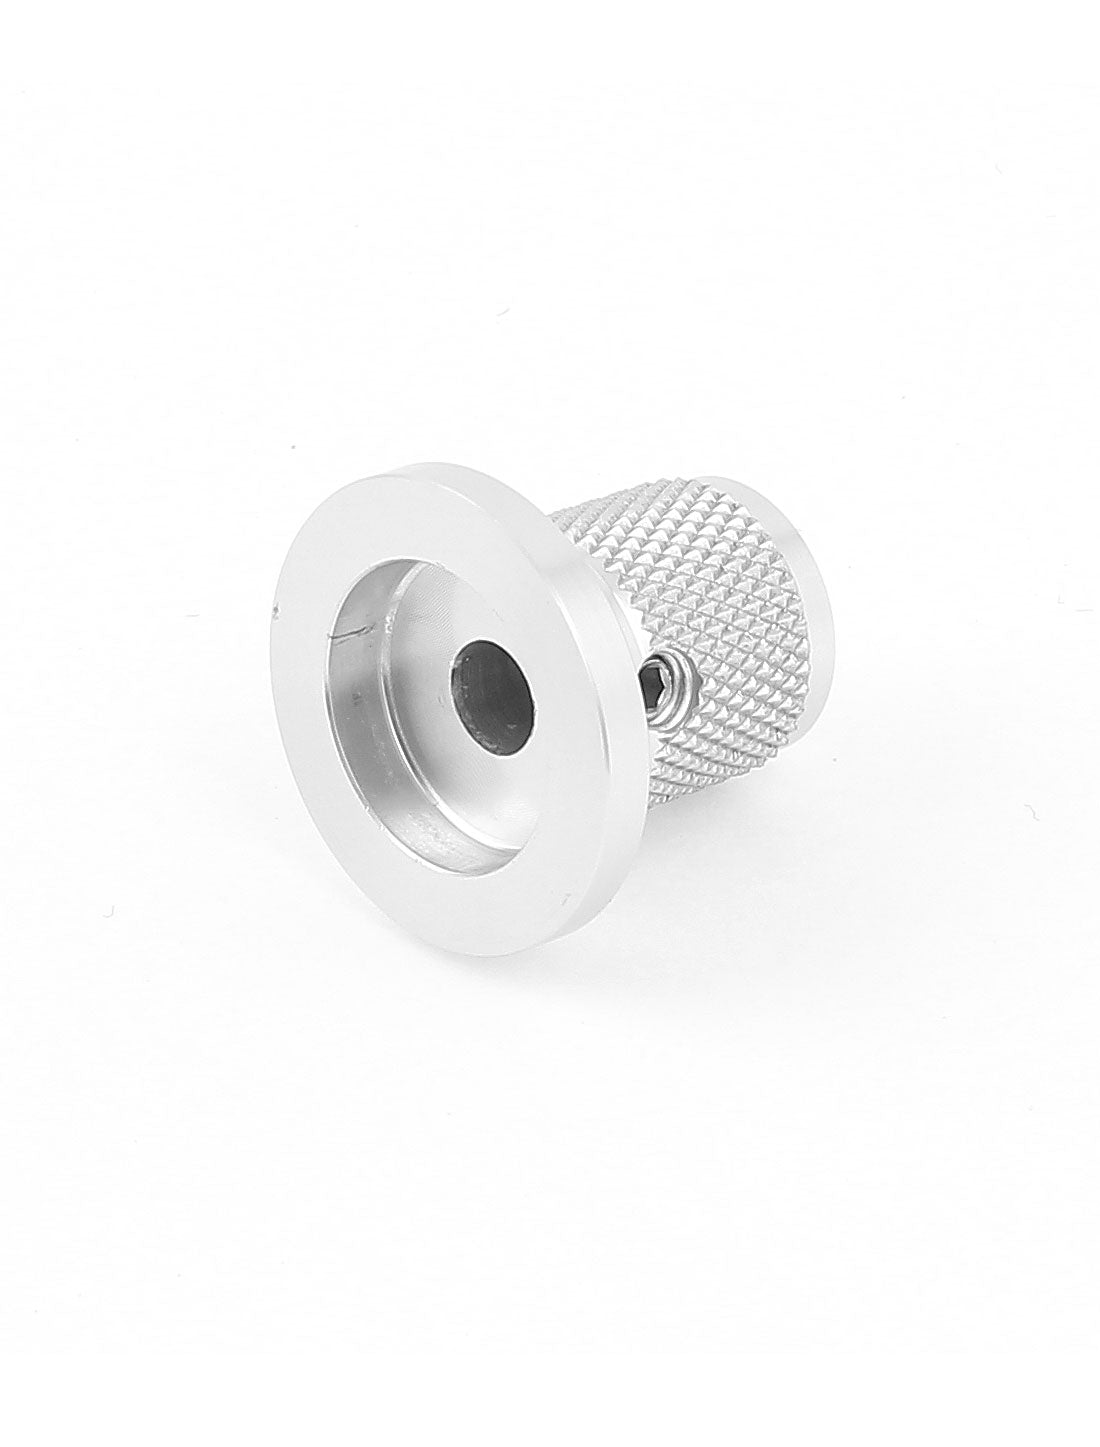 uxcell Uxcell 25mm CNC Aluminium Alloy Speaker Volume Control Potentiometer Knob Cap 6mm Hole